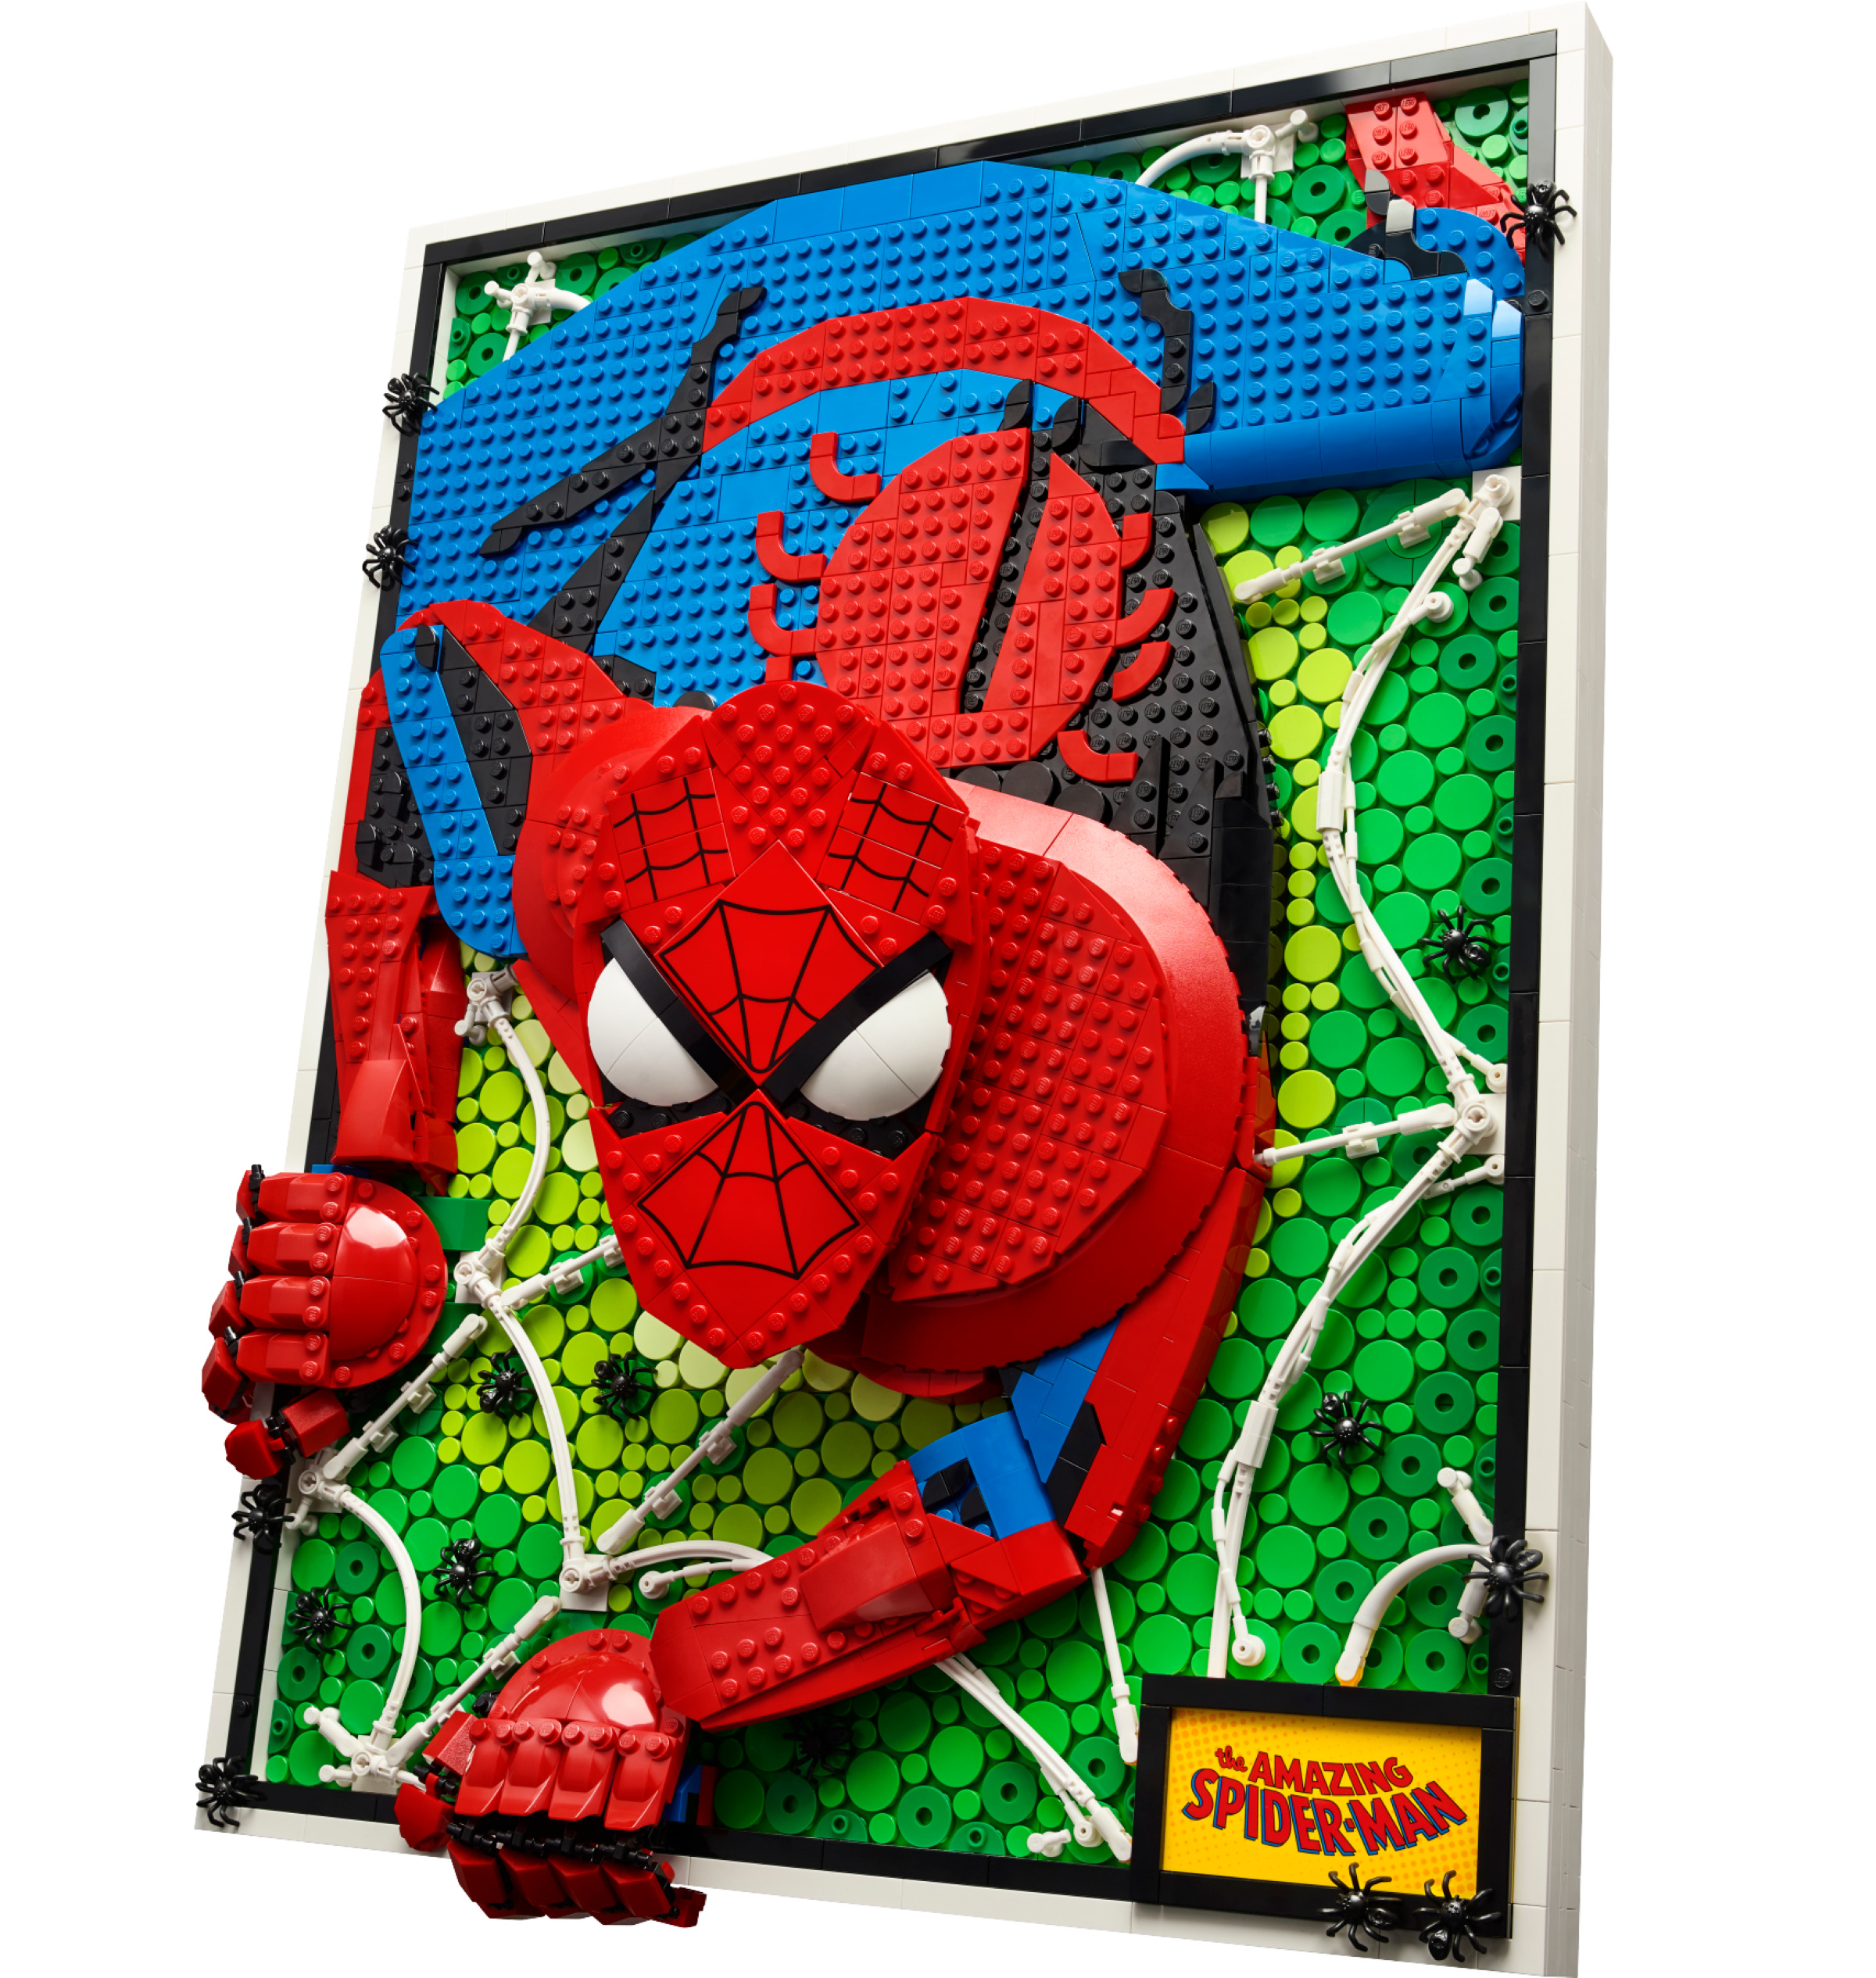 Le tableau mural Instant Spiderman